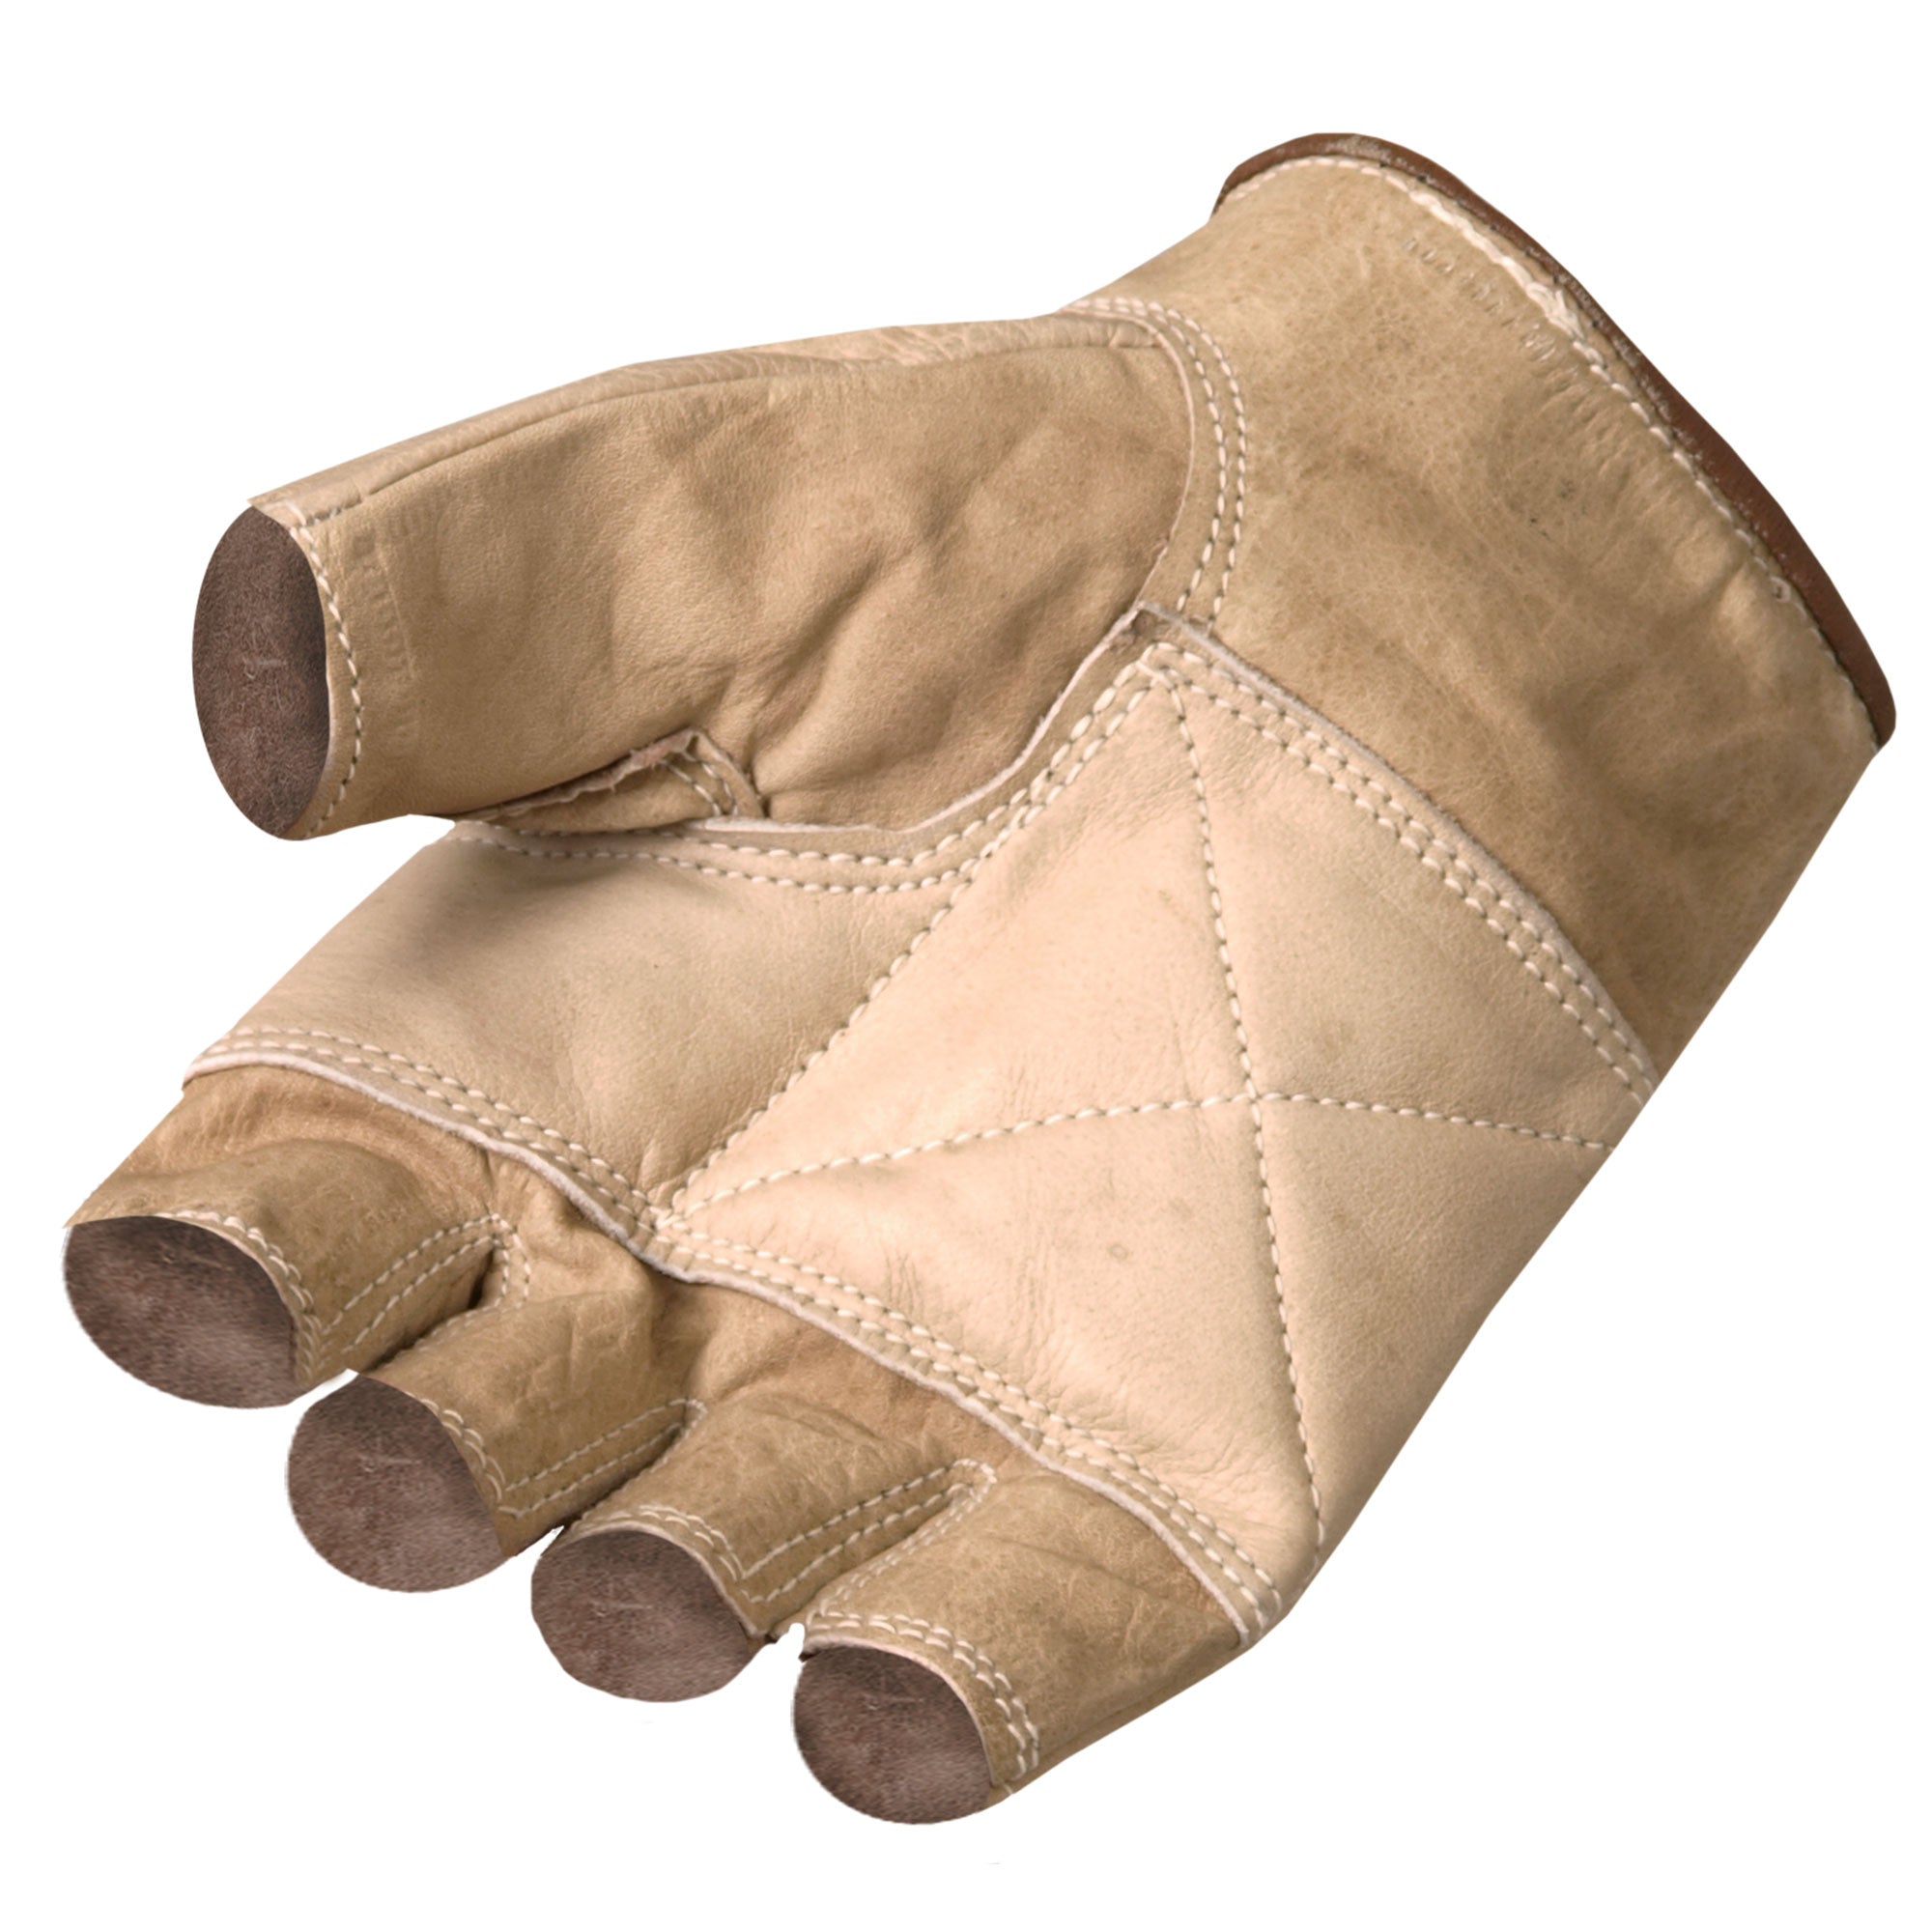 Leather Gloves, Fingerless, Brown, M, PR